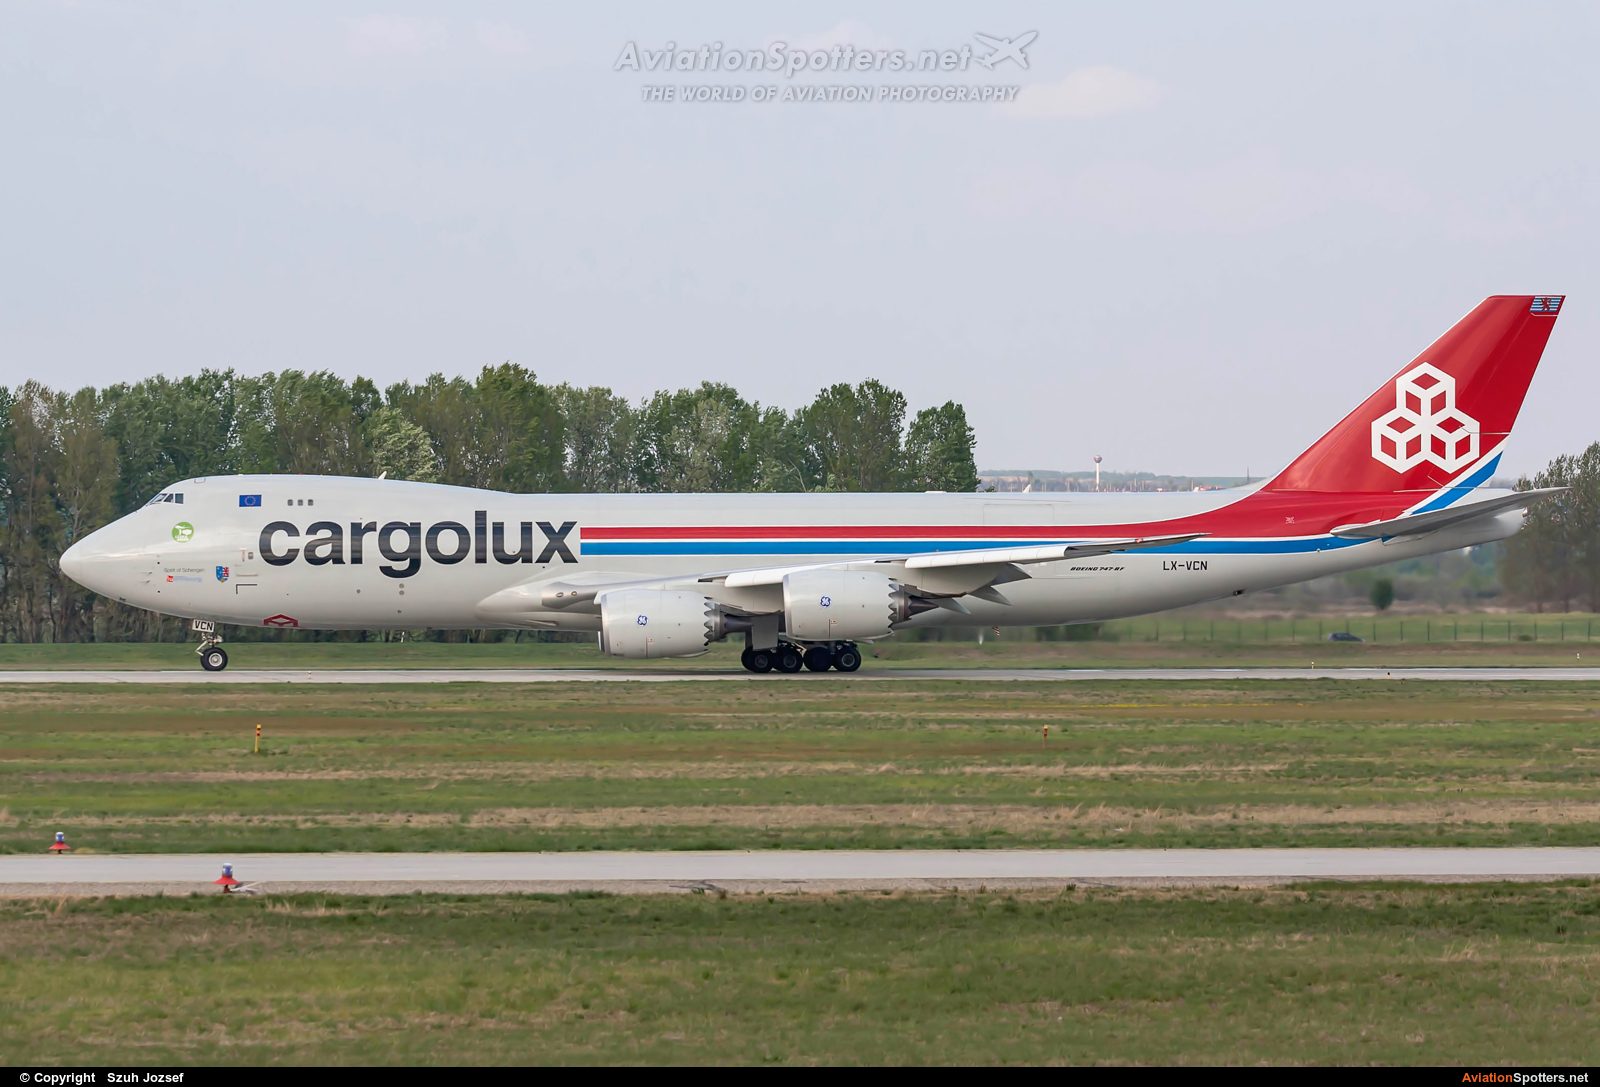 Cargolux  -  747-8F  (LX-VCN) By Szuh Jozsef (szuh jozsef)